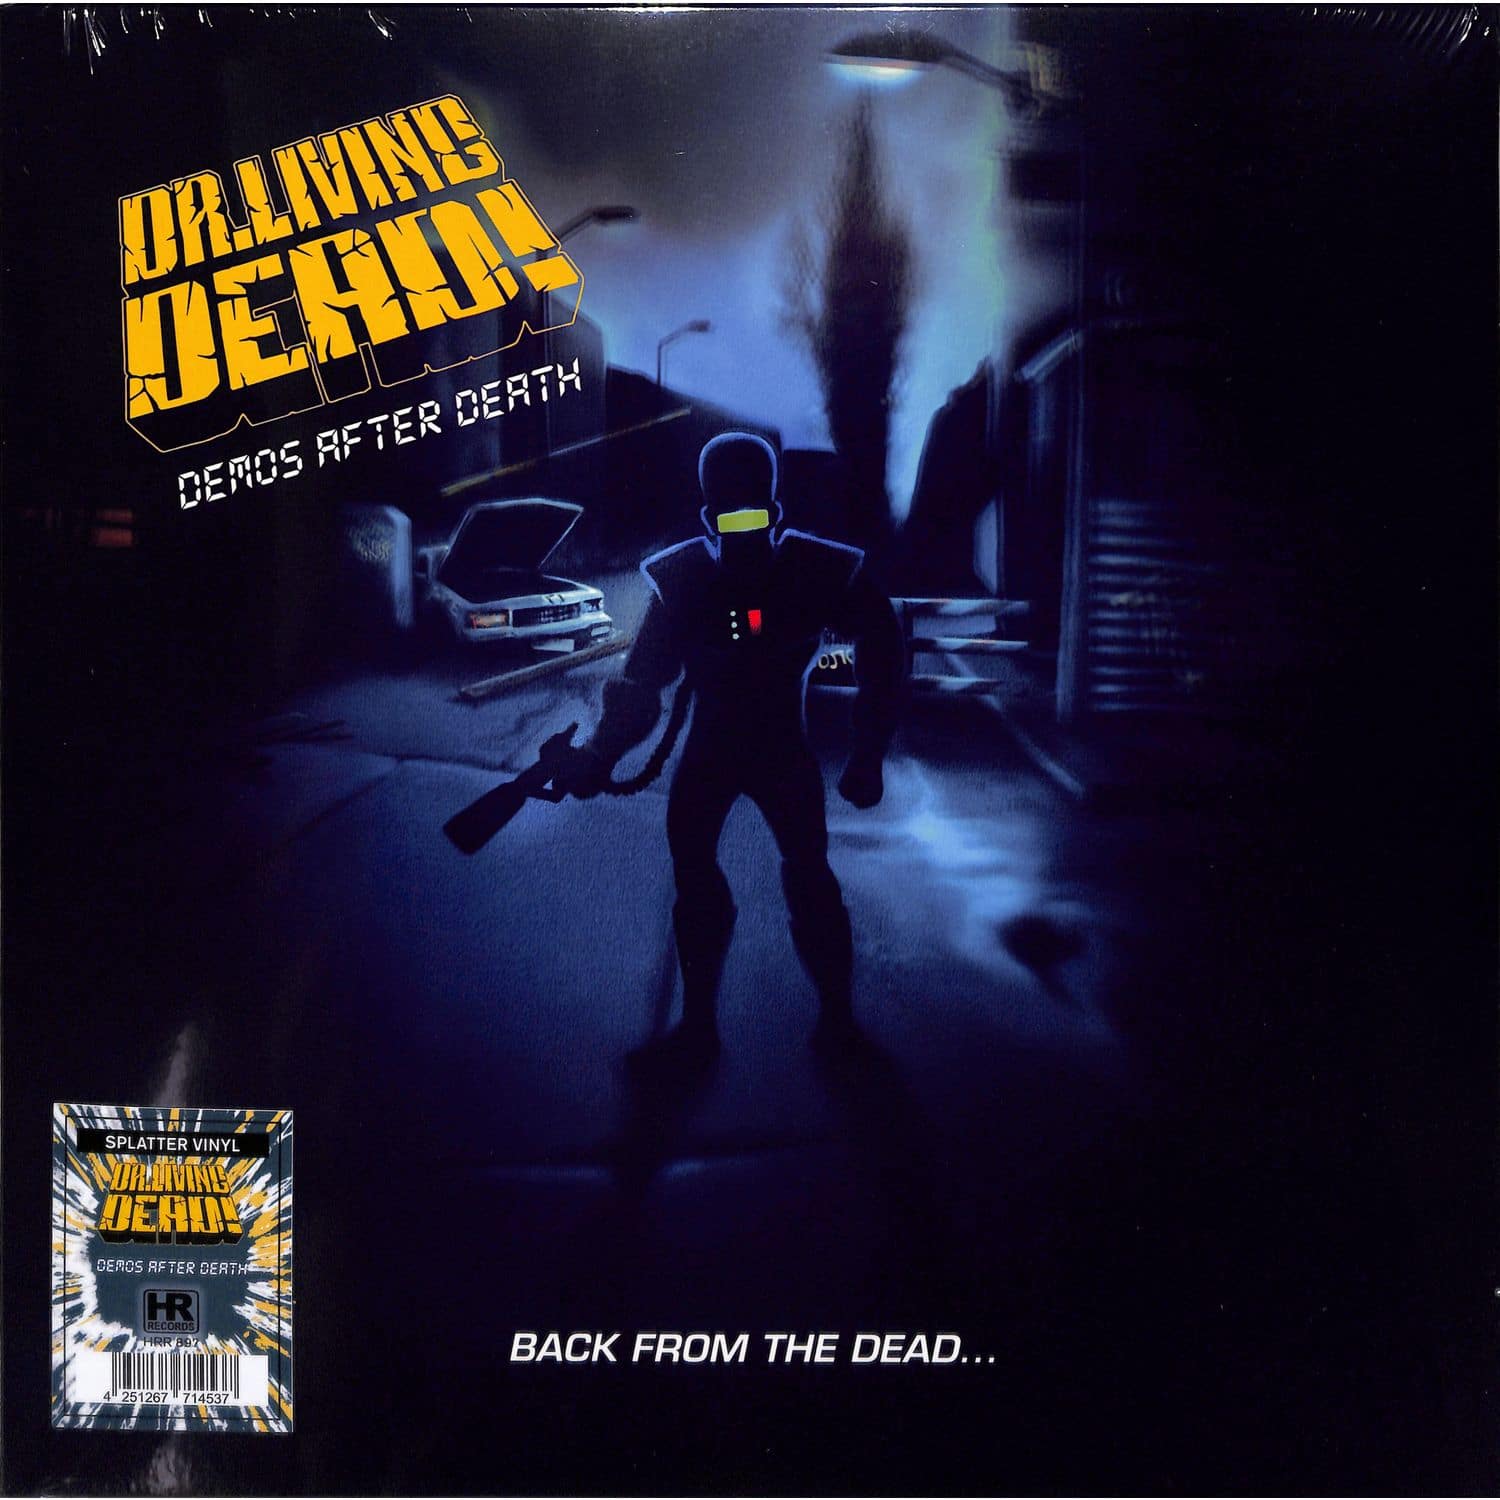 Dr.Living Dead! - DEMOS AFTER DEATH 